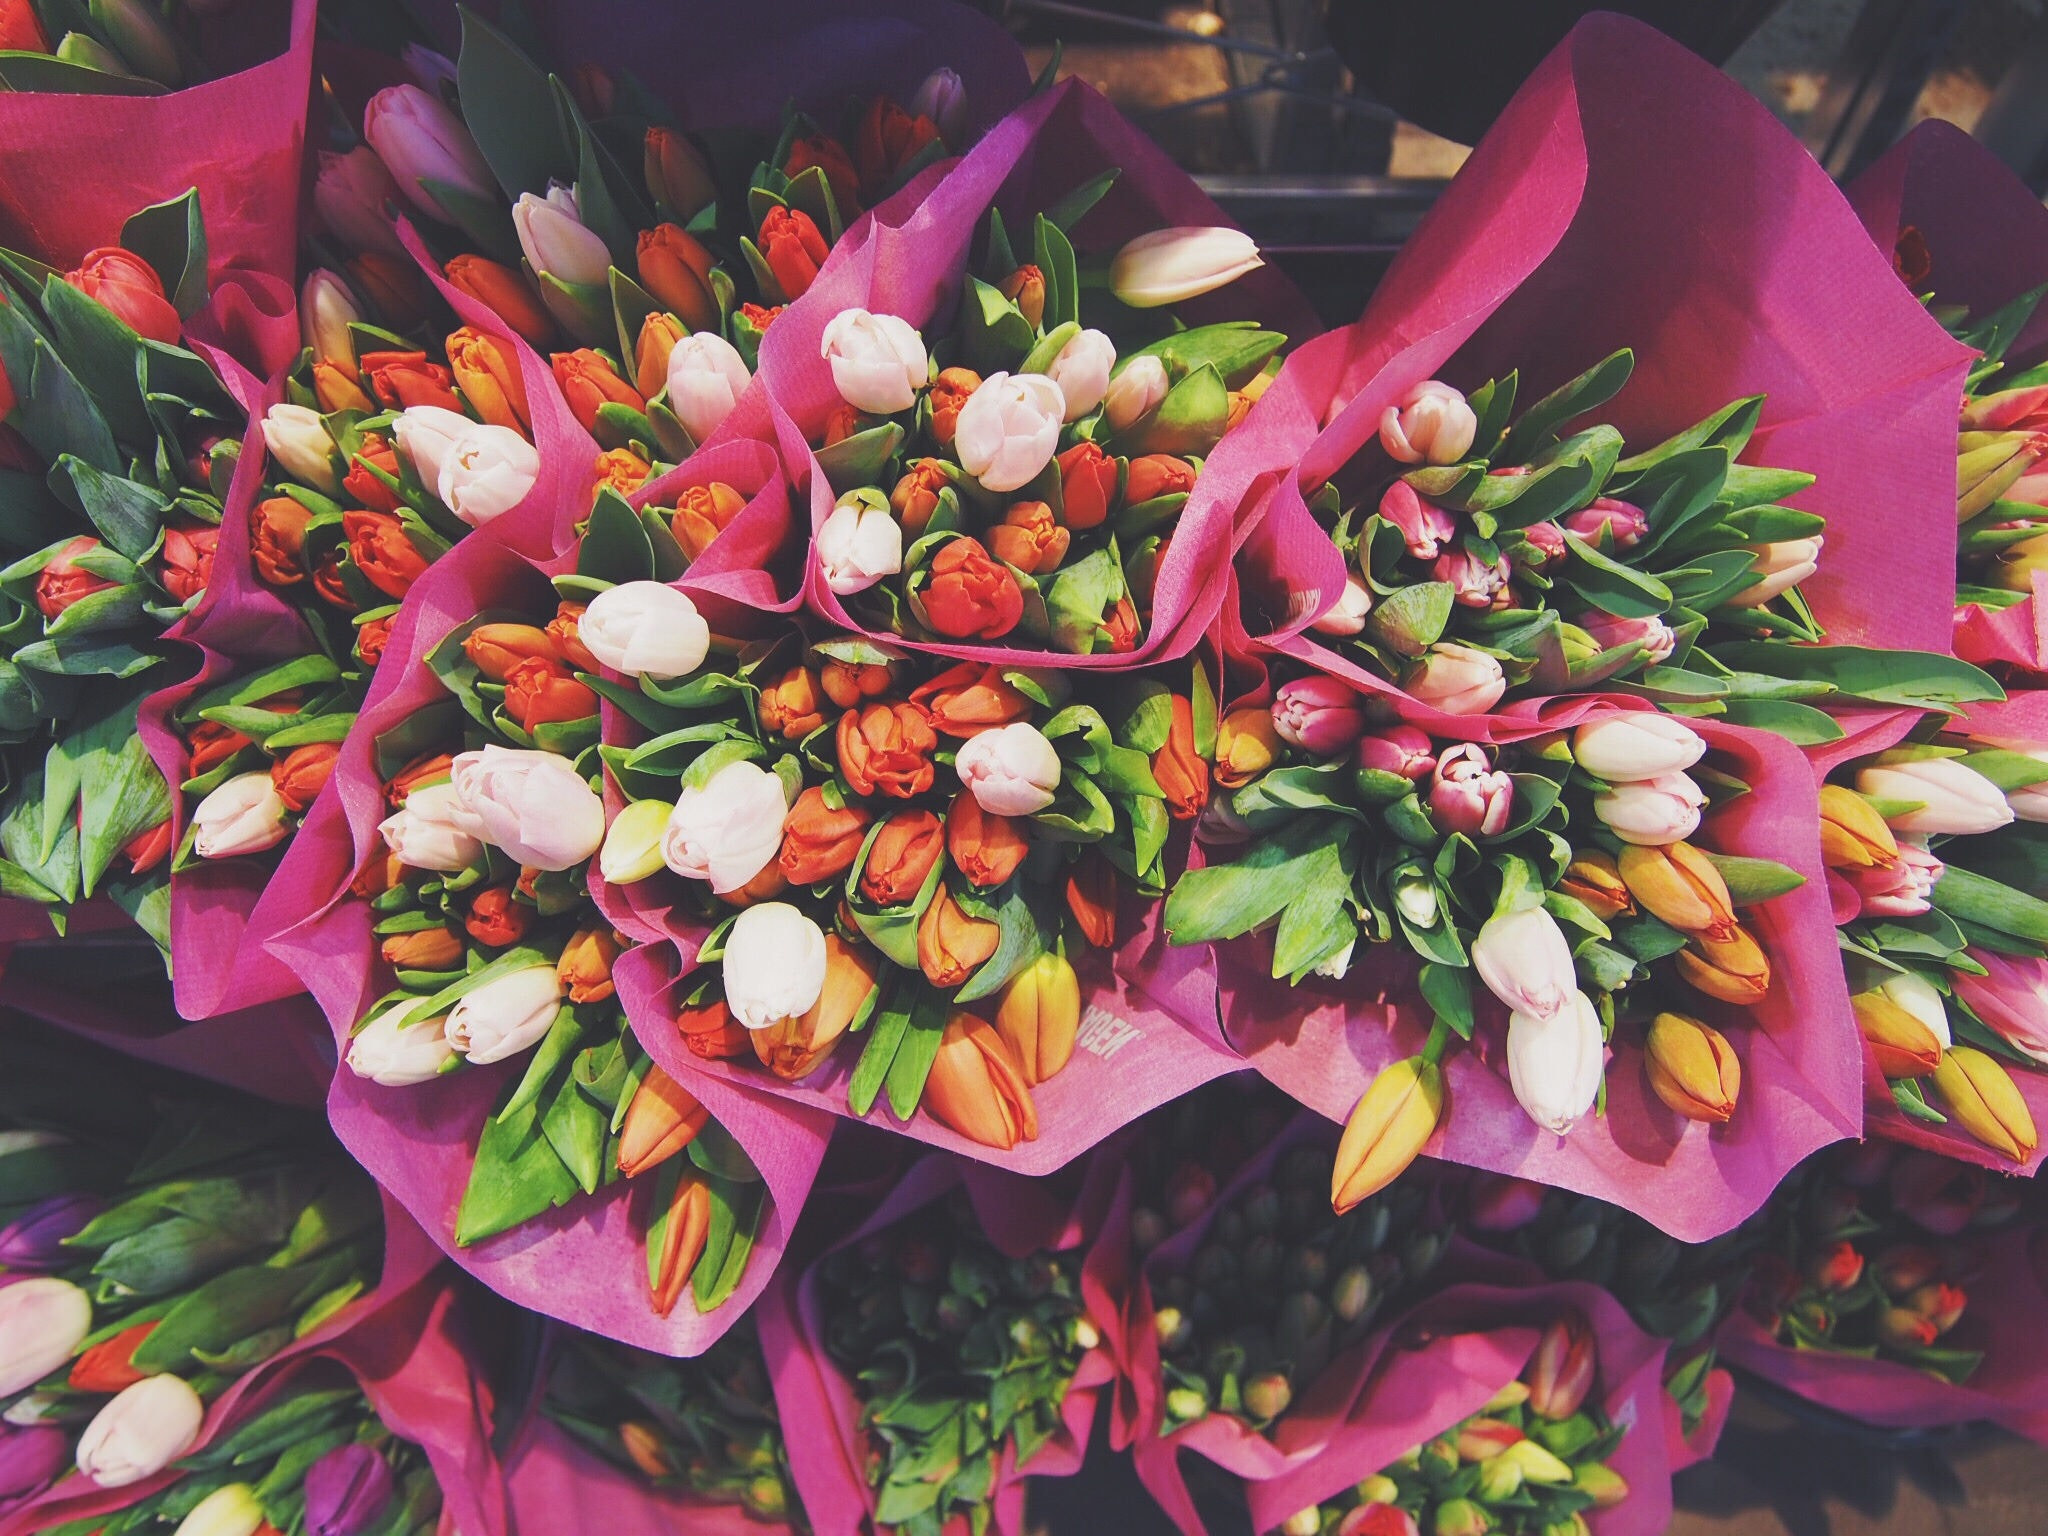 Wholesale Flowers for Sale |  Buy Bulk Flowers